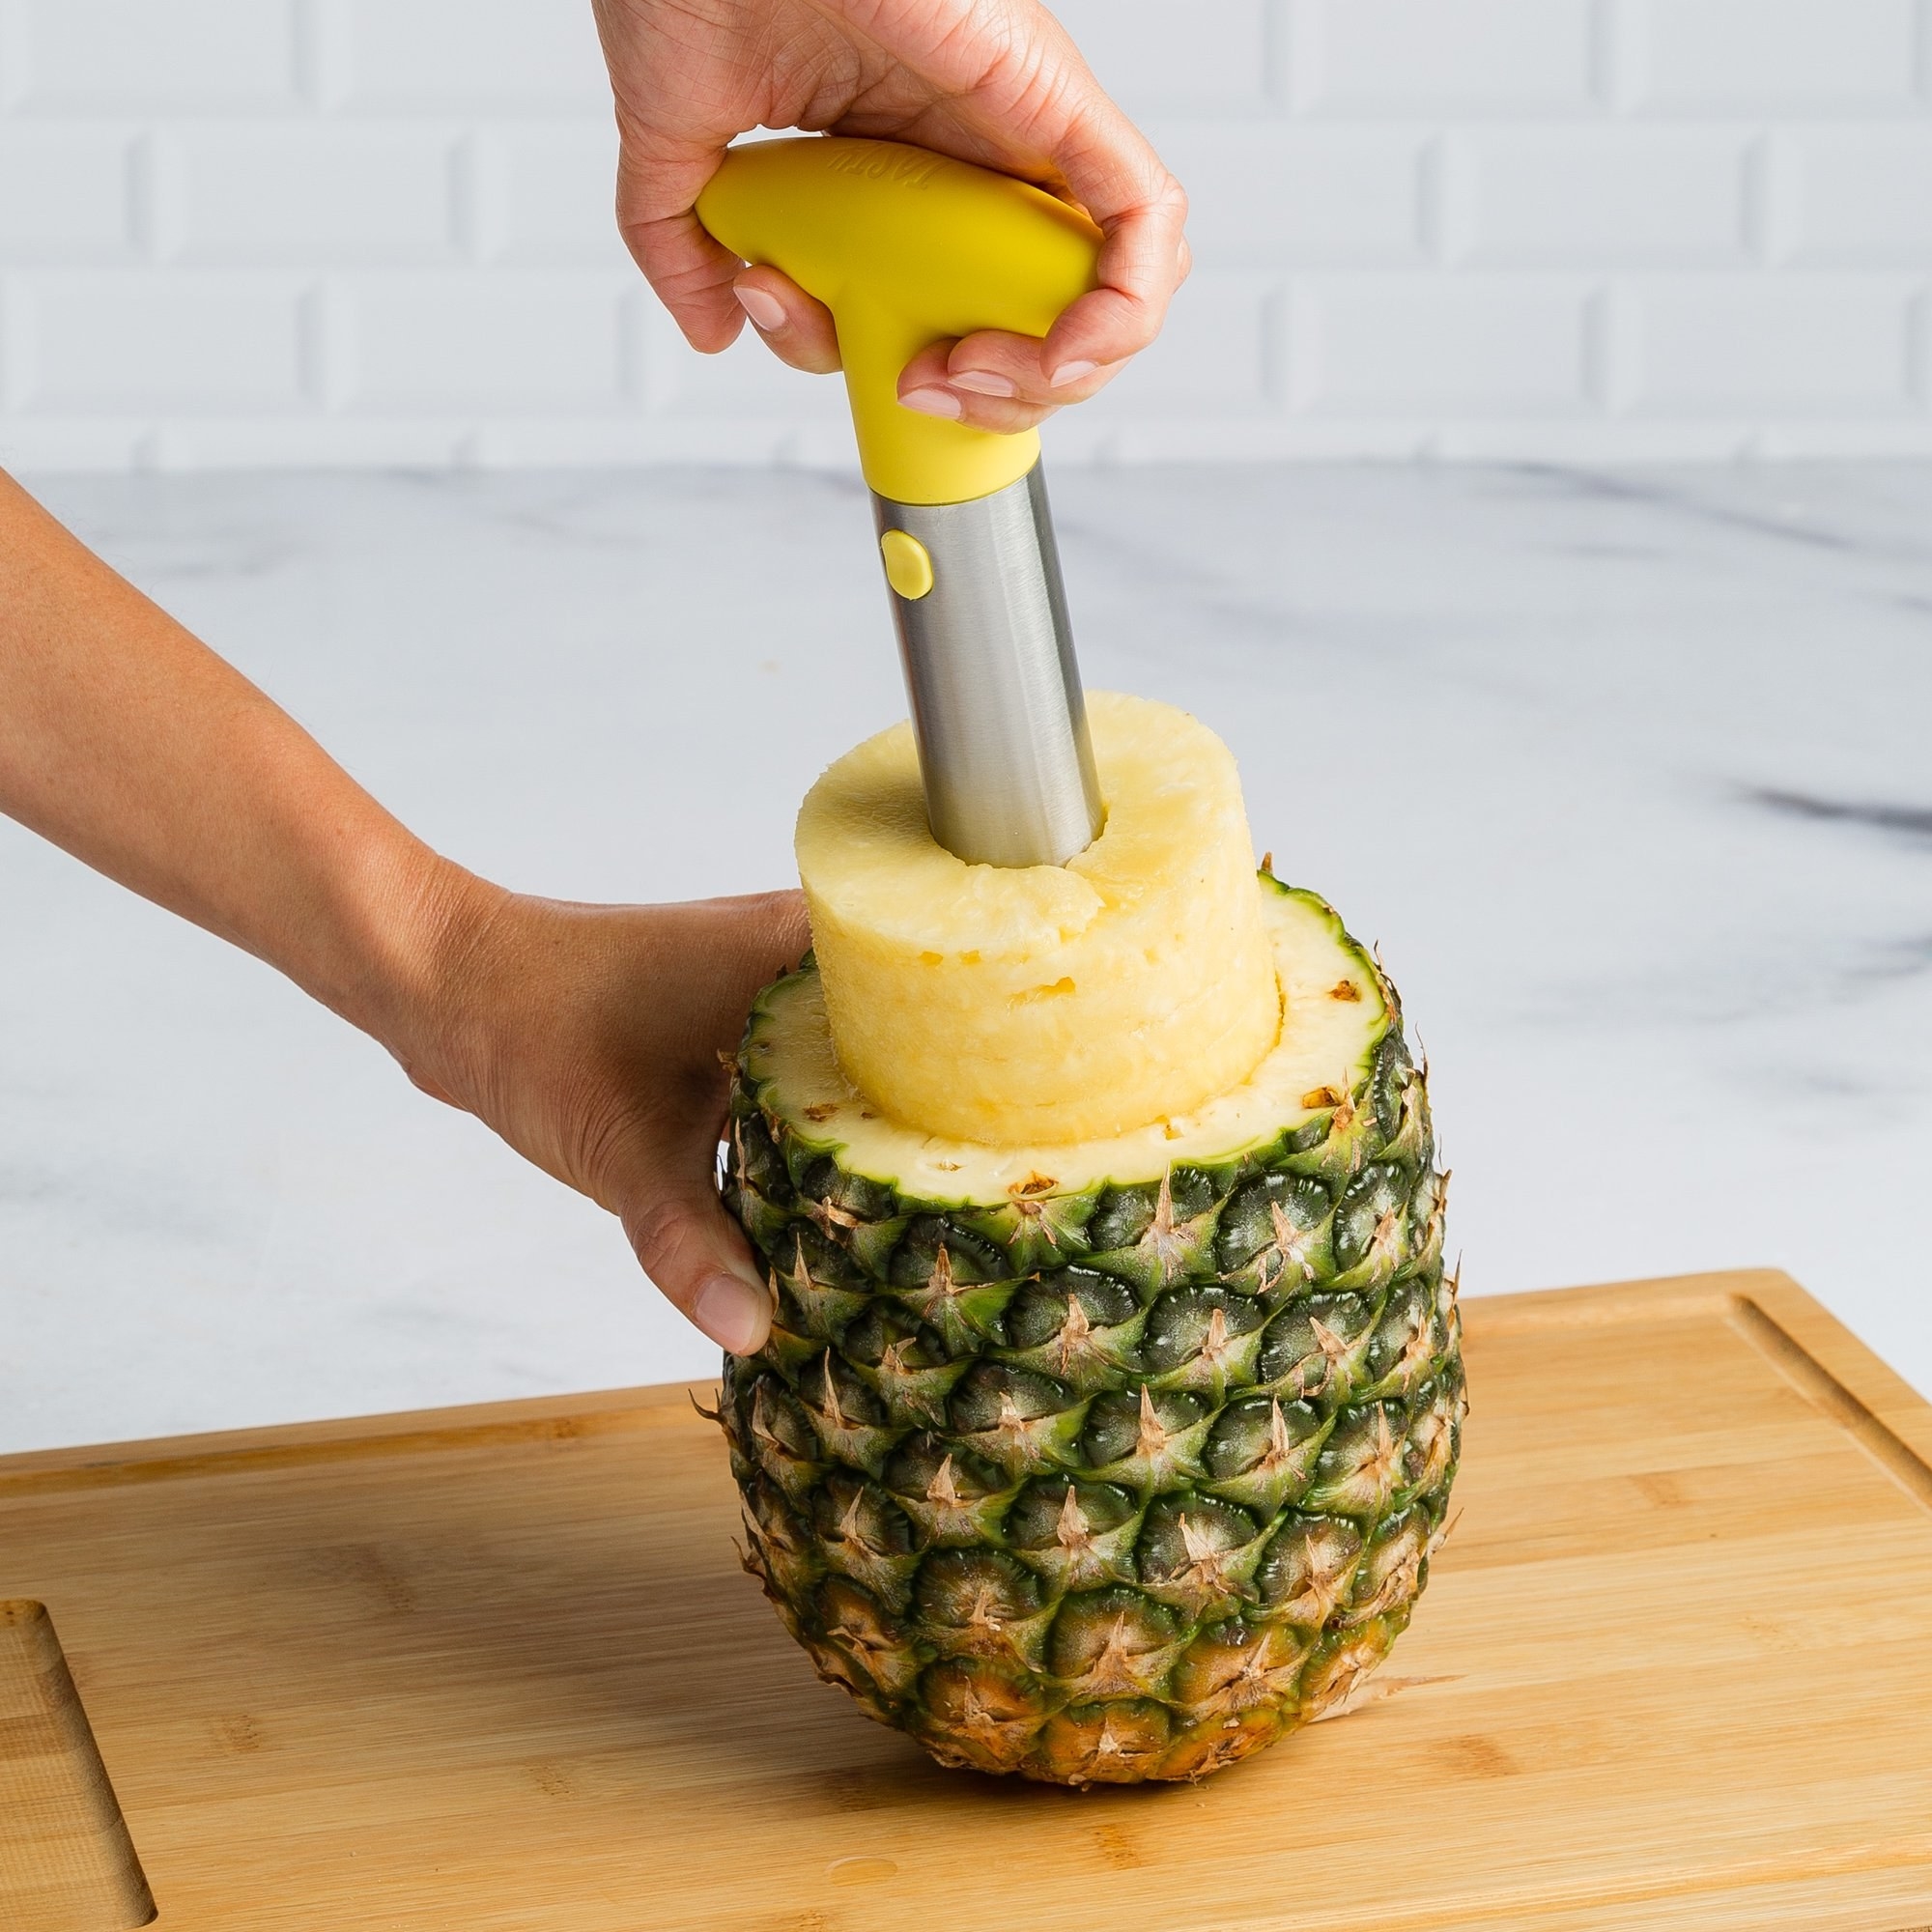 the pineapple corer